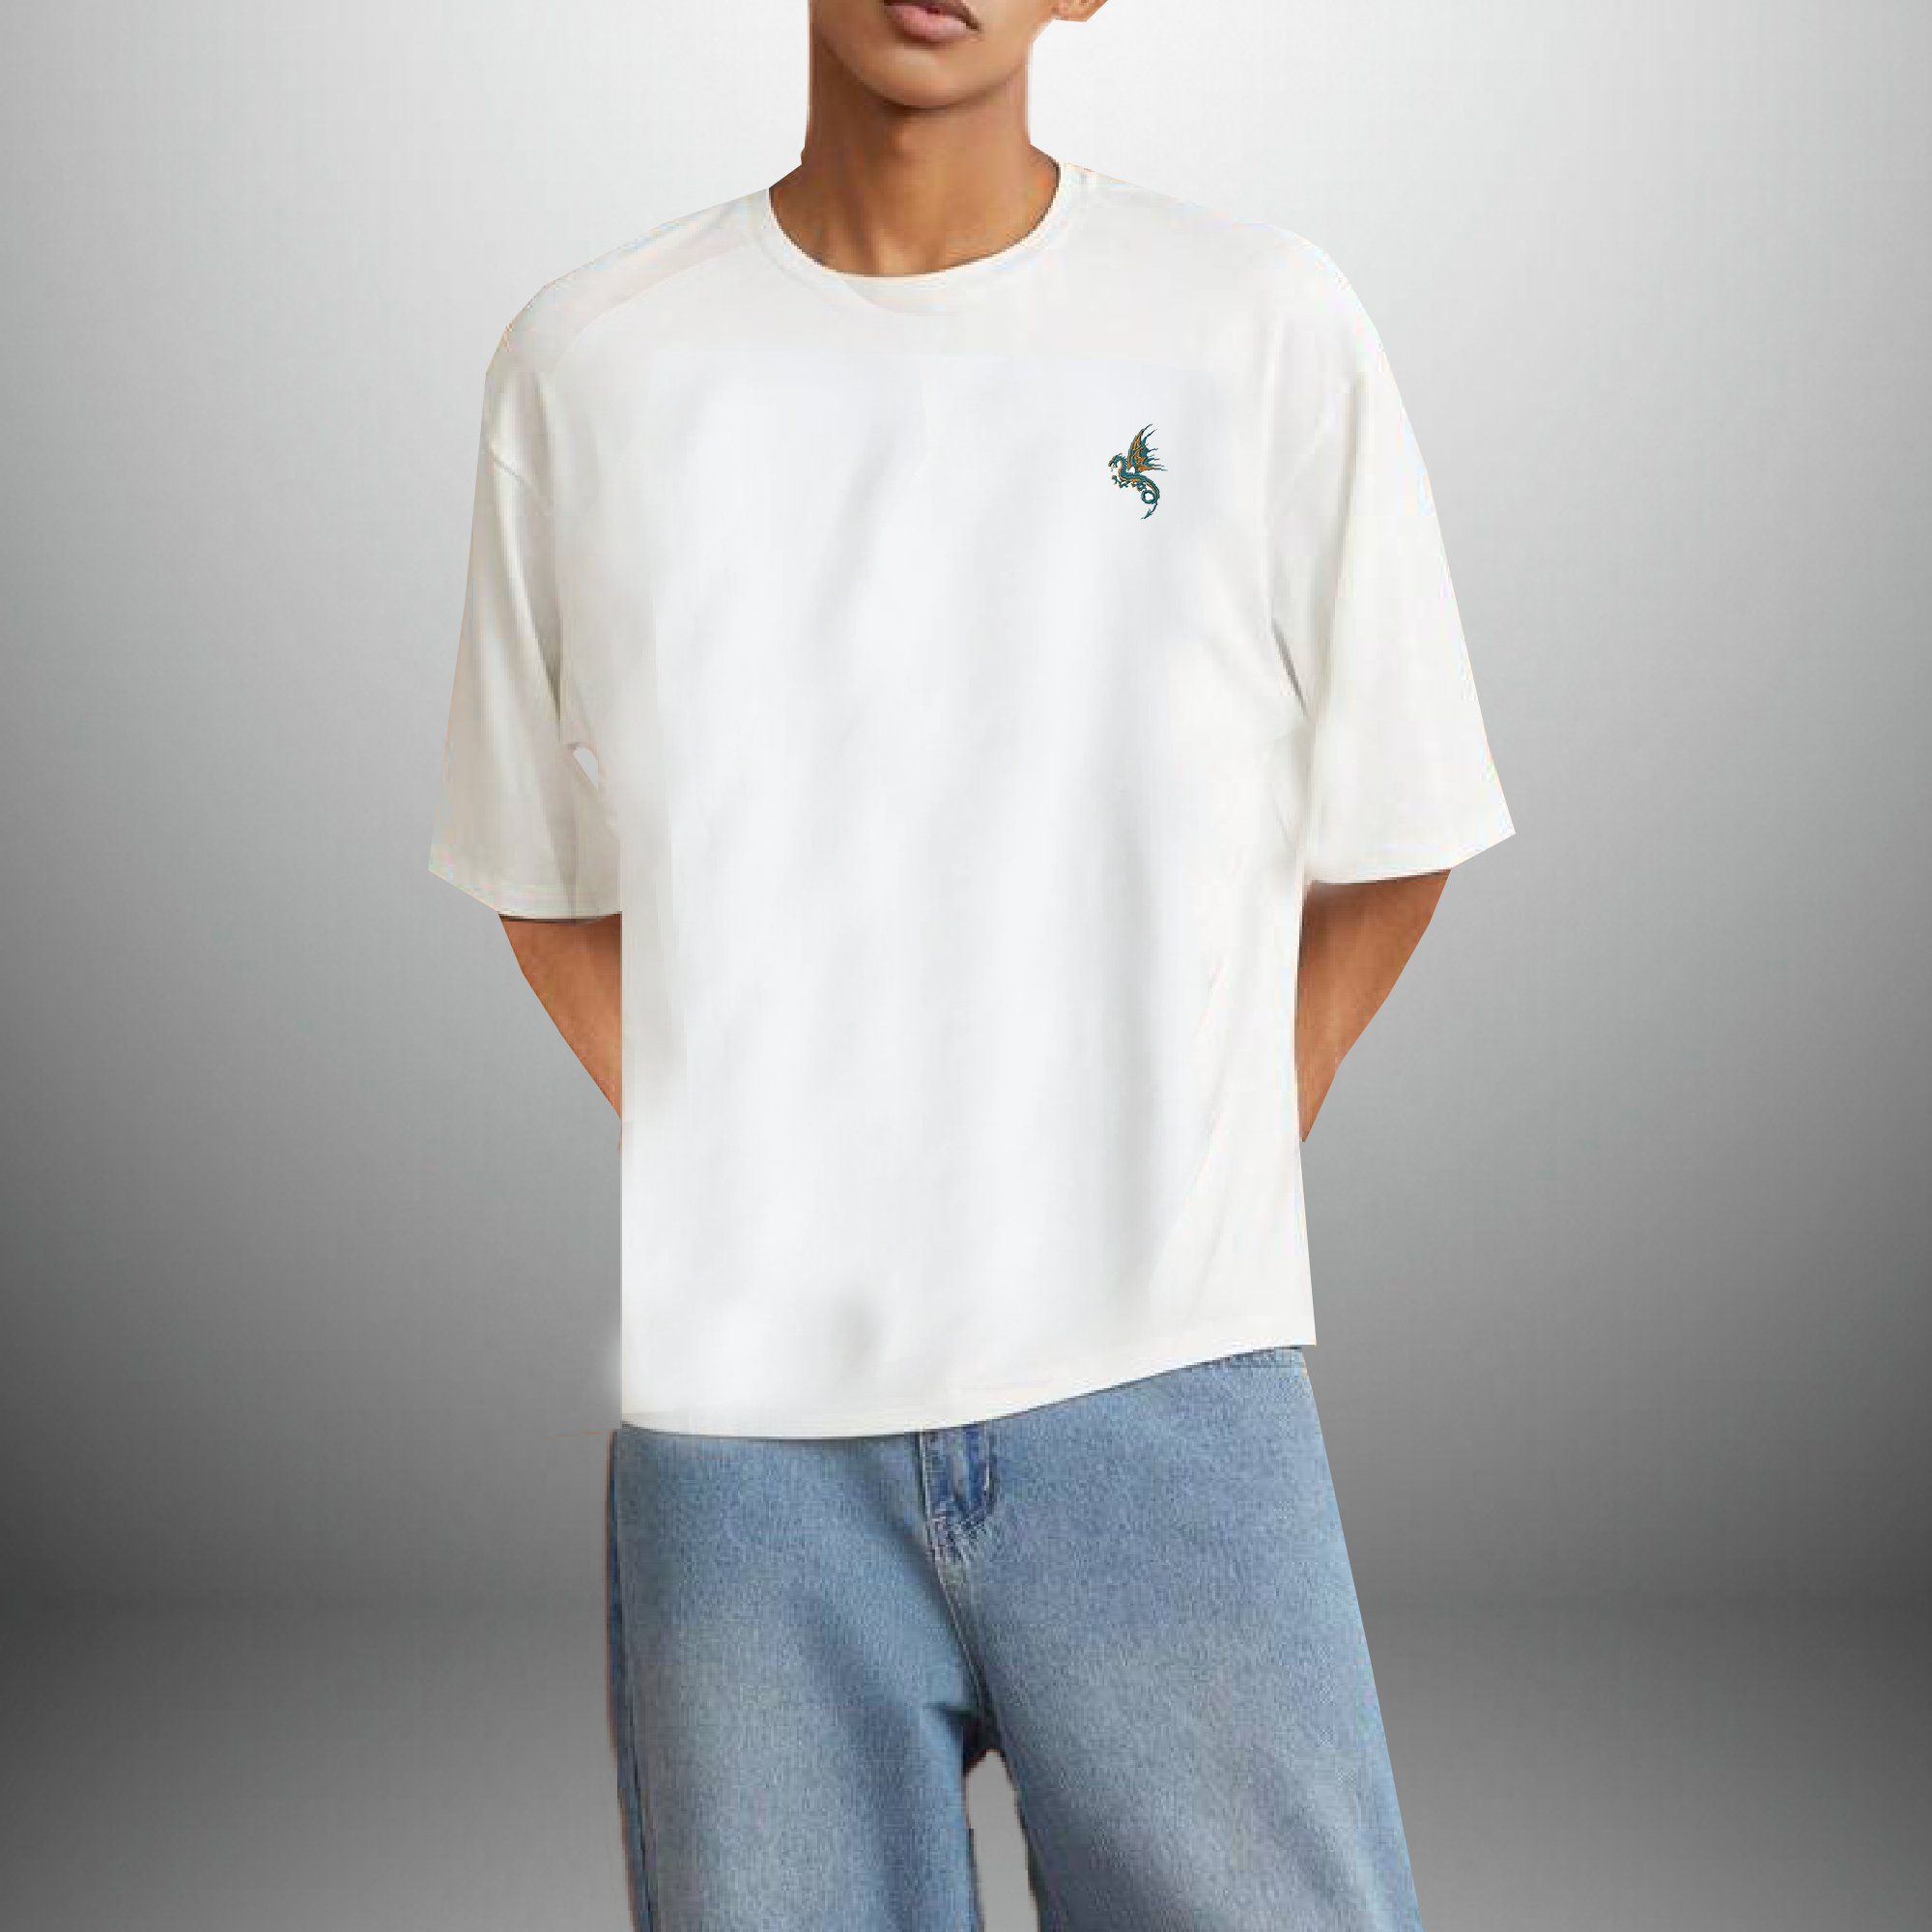 Men's white round neck T-shirt with dragon motif-RKTM013